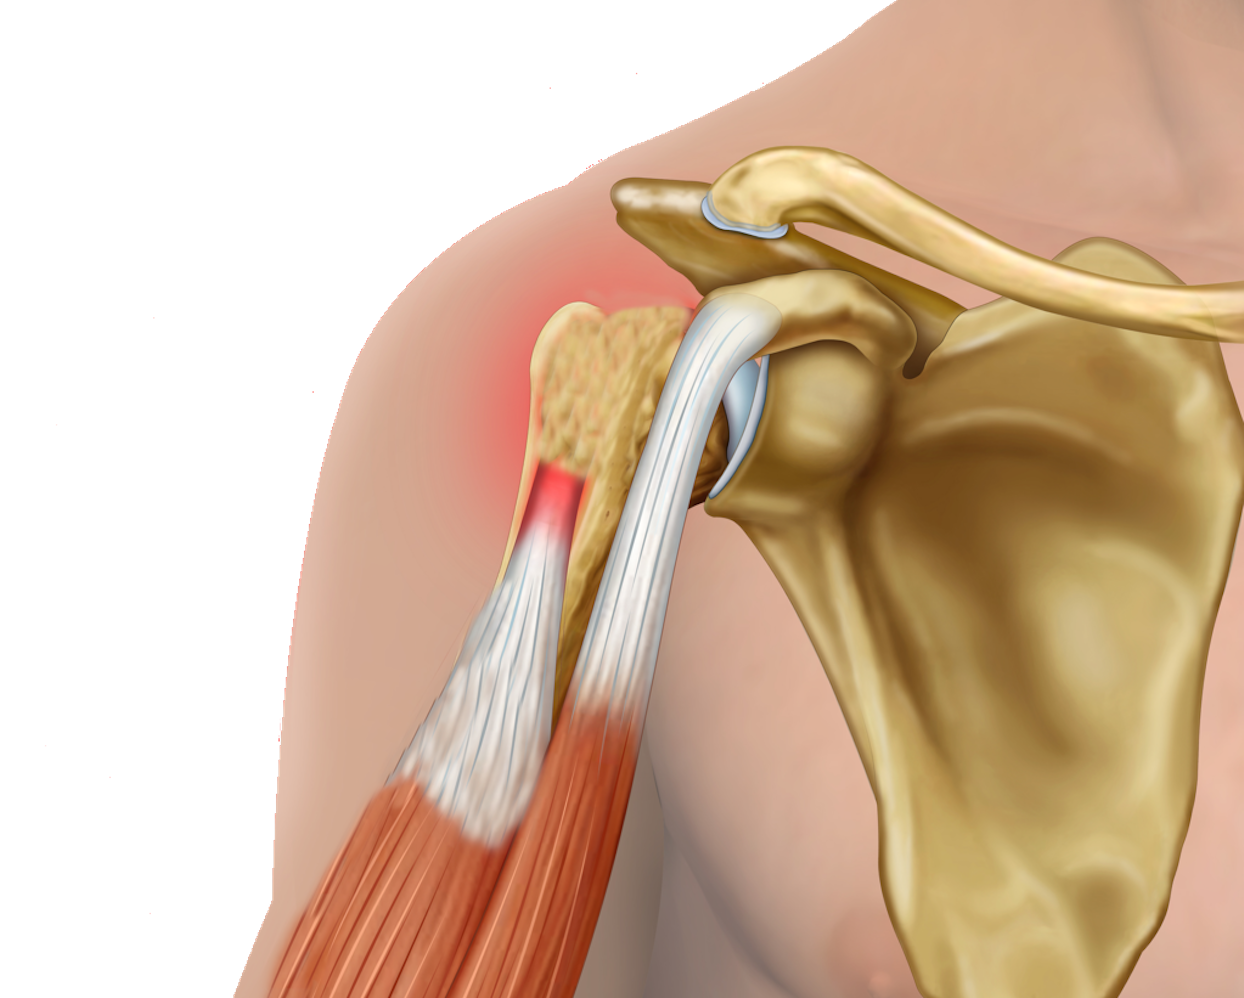 Biceps (LHB) tendon rupture